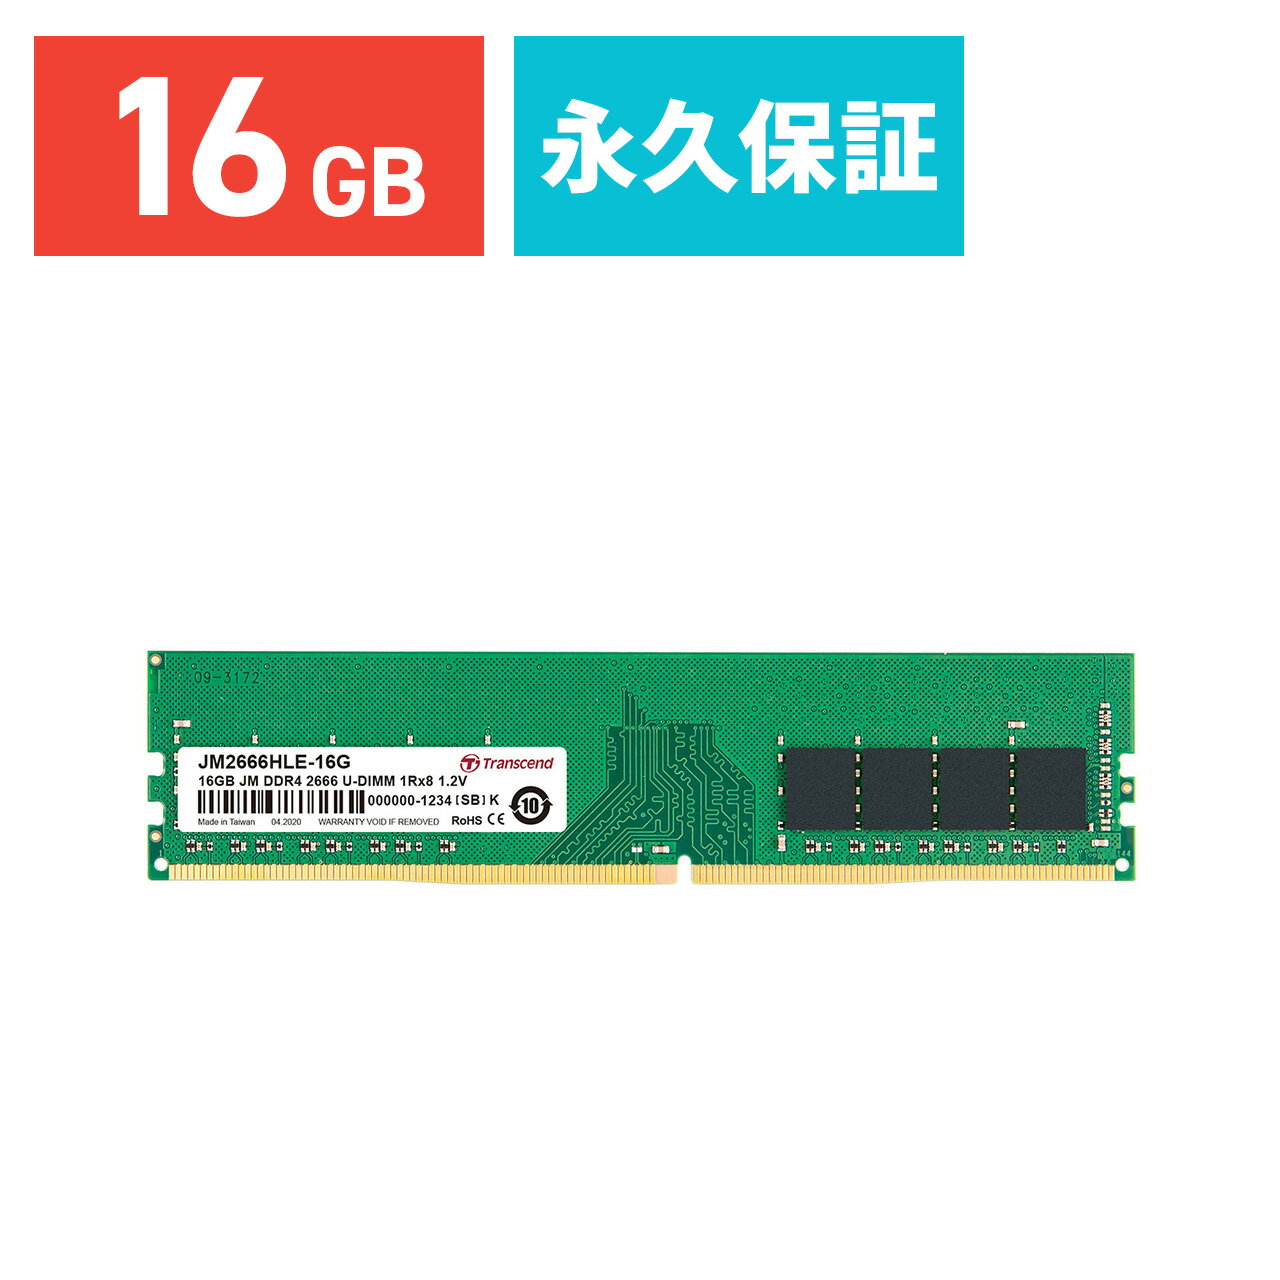 Transcend fXNgbvp 16GB DDR4-2666 PC4-2130U-DIMM JM2666HLE-16G